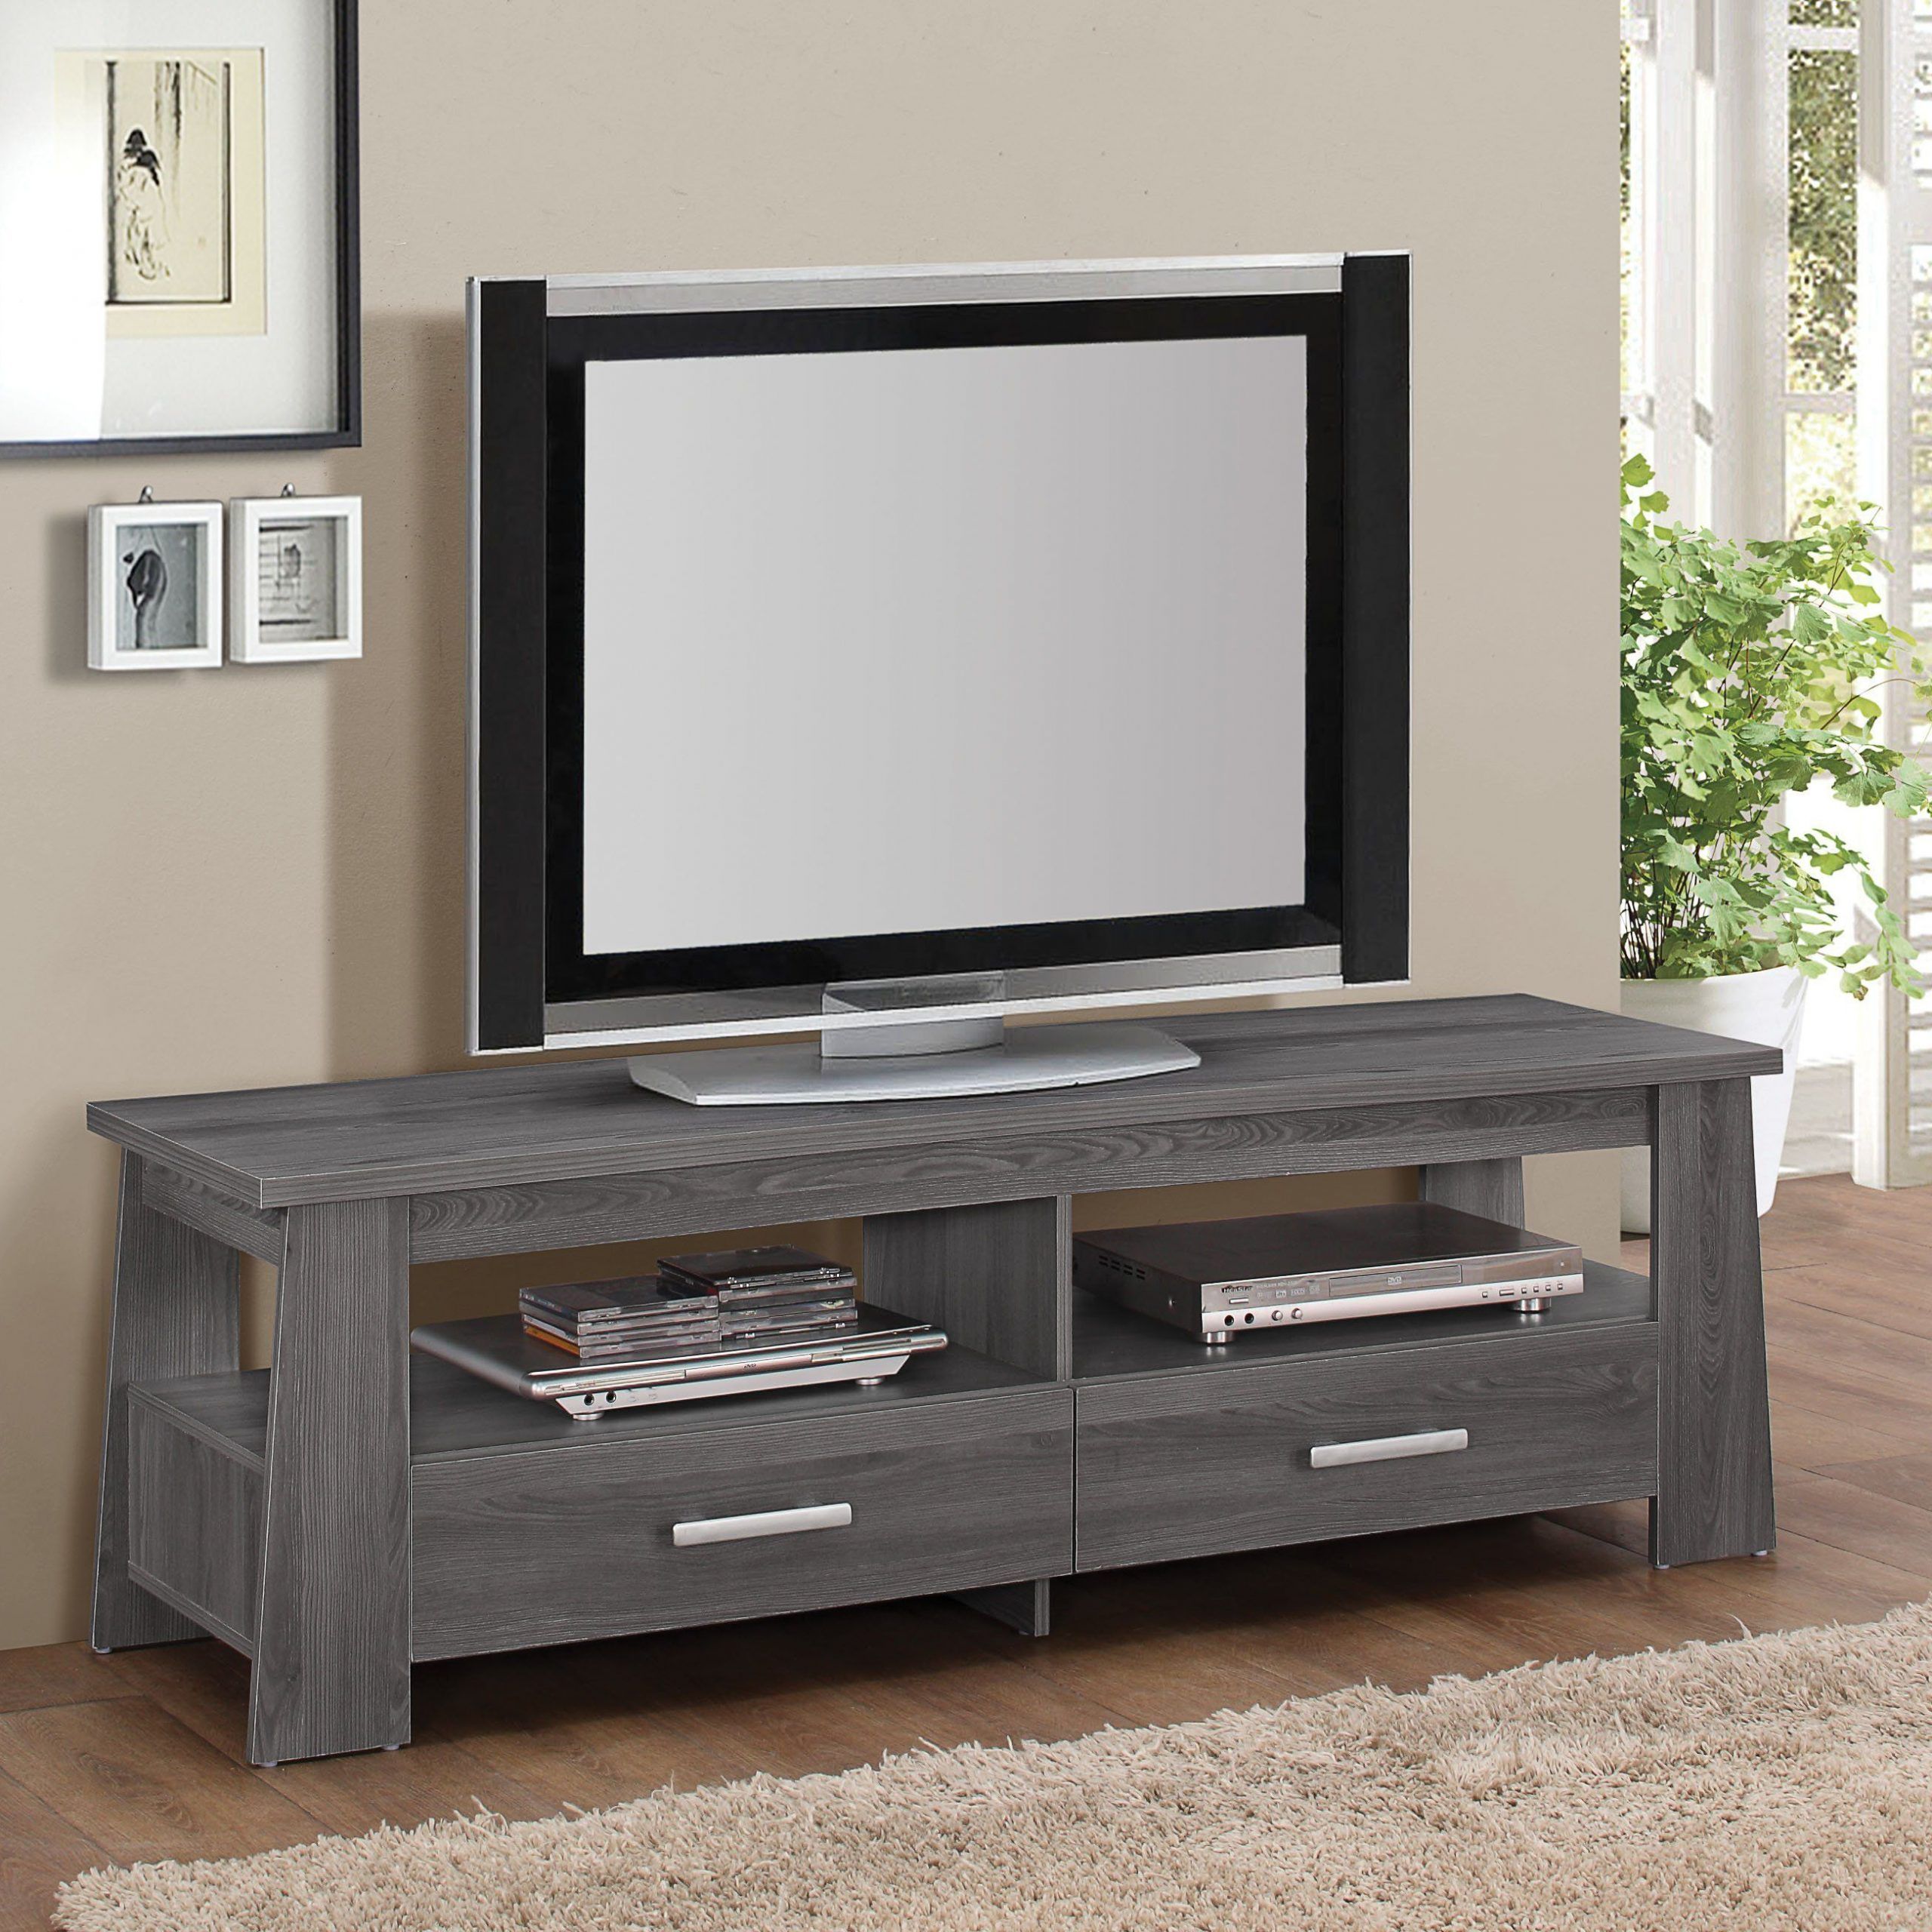 Dark Oak Tv Stands For Flat Screen – Home Ideas For Light Oak Tv Stands Flat Screen (Photo 3 of 15)